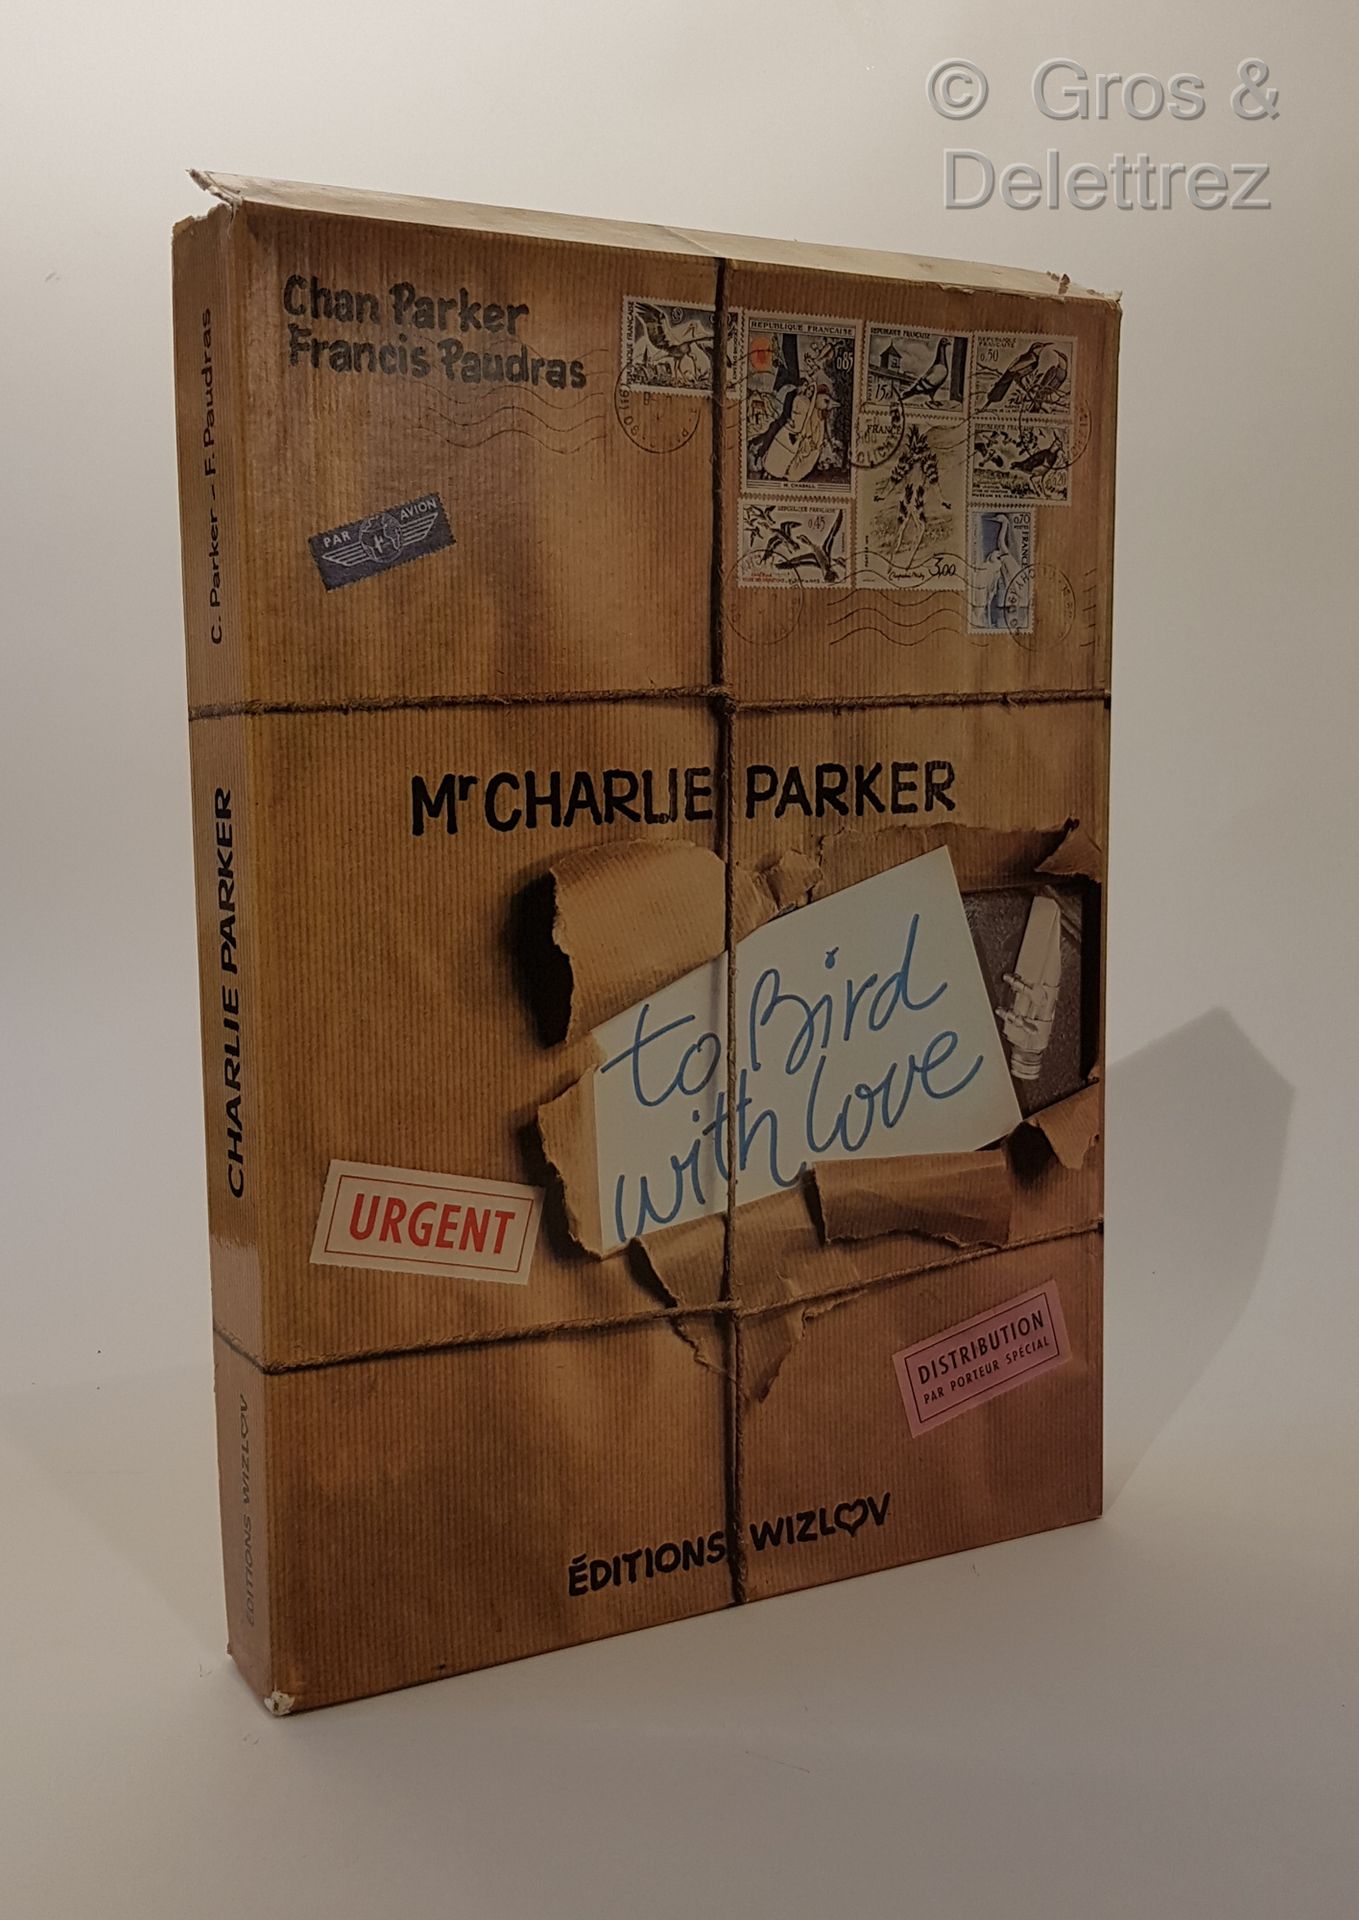 Null [摄影] 陈-帕克和弗朗西斯-保德拉斯。



查理-帕克先生 致爱的小鸟



威兹洛夫出版社，1980年，以全出版商的纸板装订在一个破旧的插图盒子&hellip;